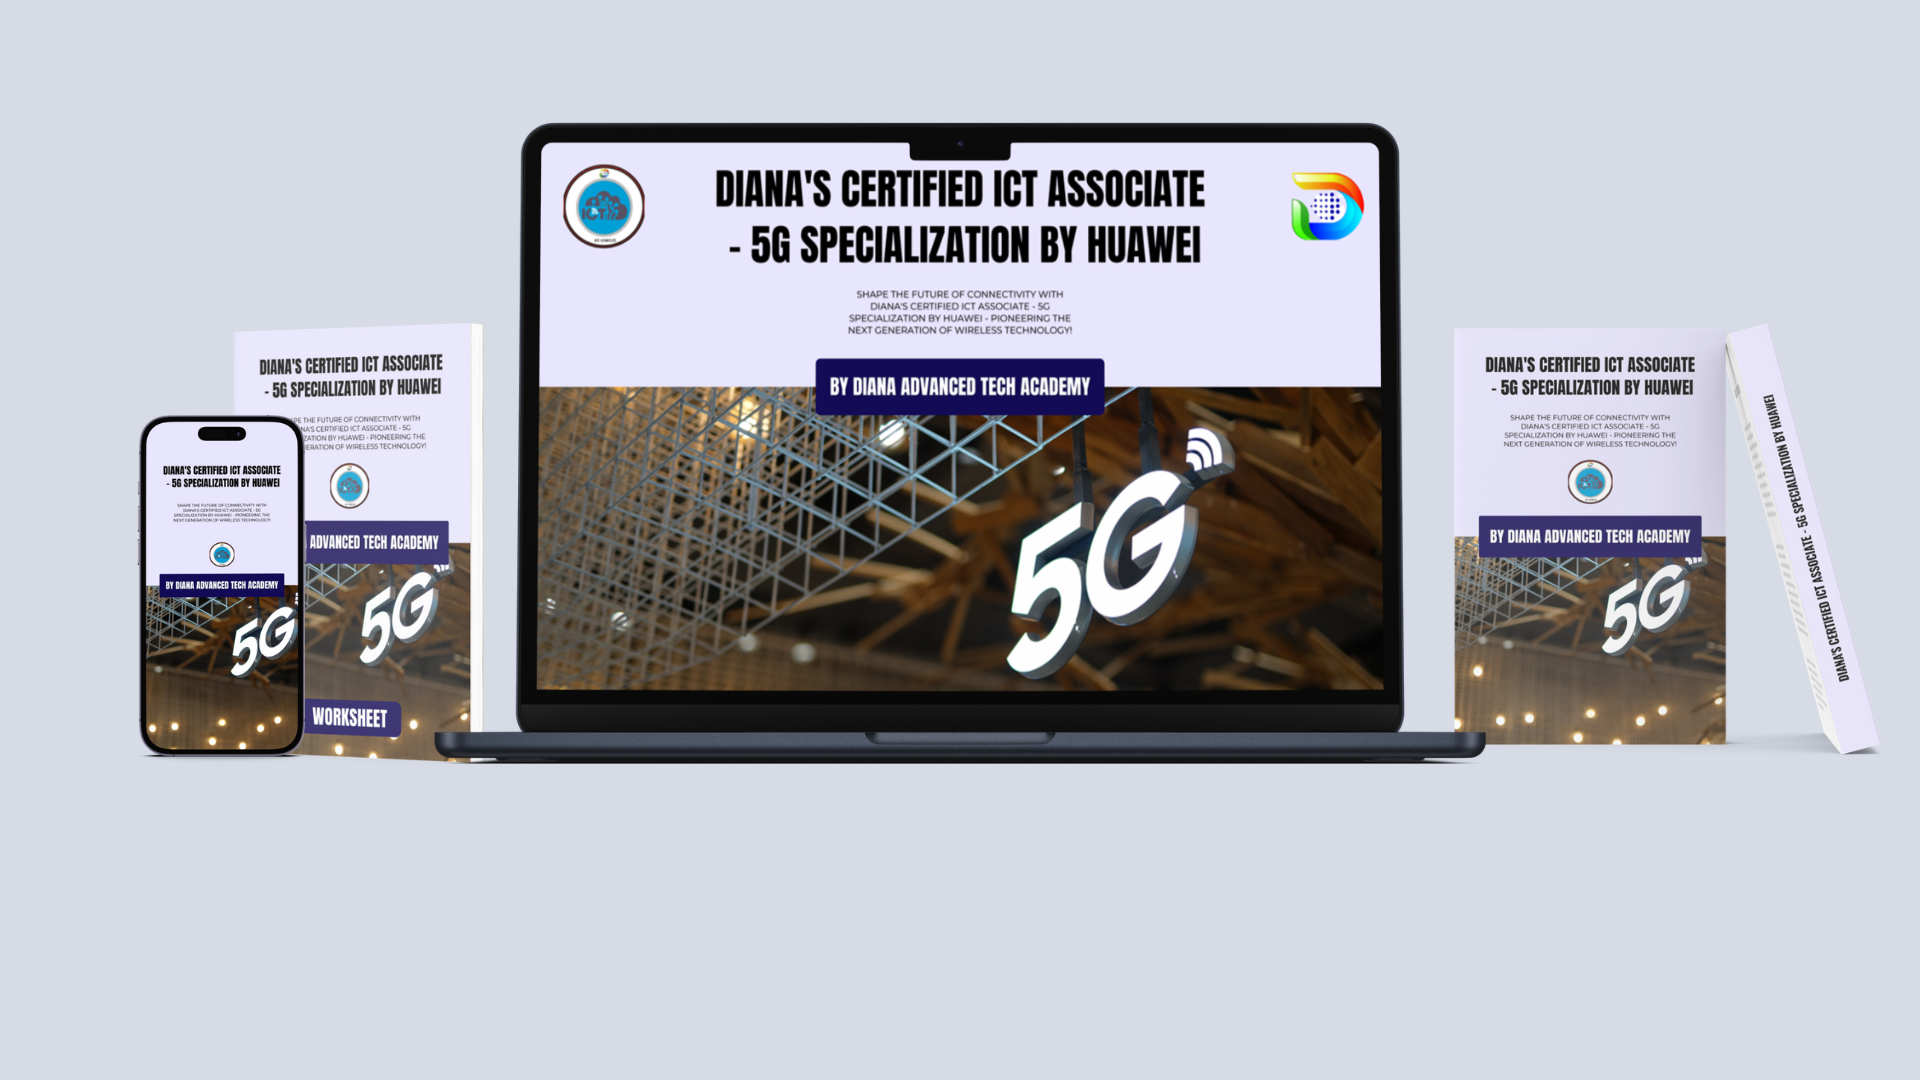 Diana’s Certified ICT Associate – 5G Specialization by Huawei